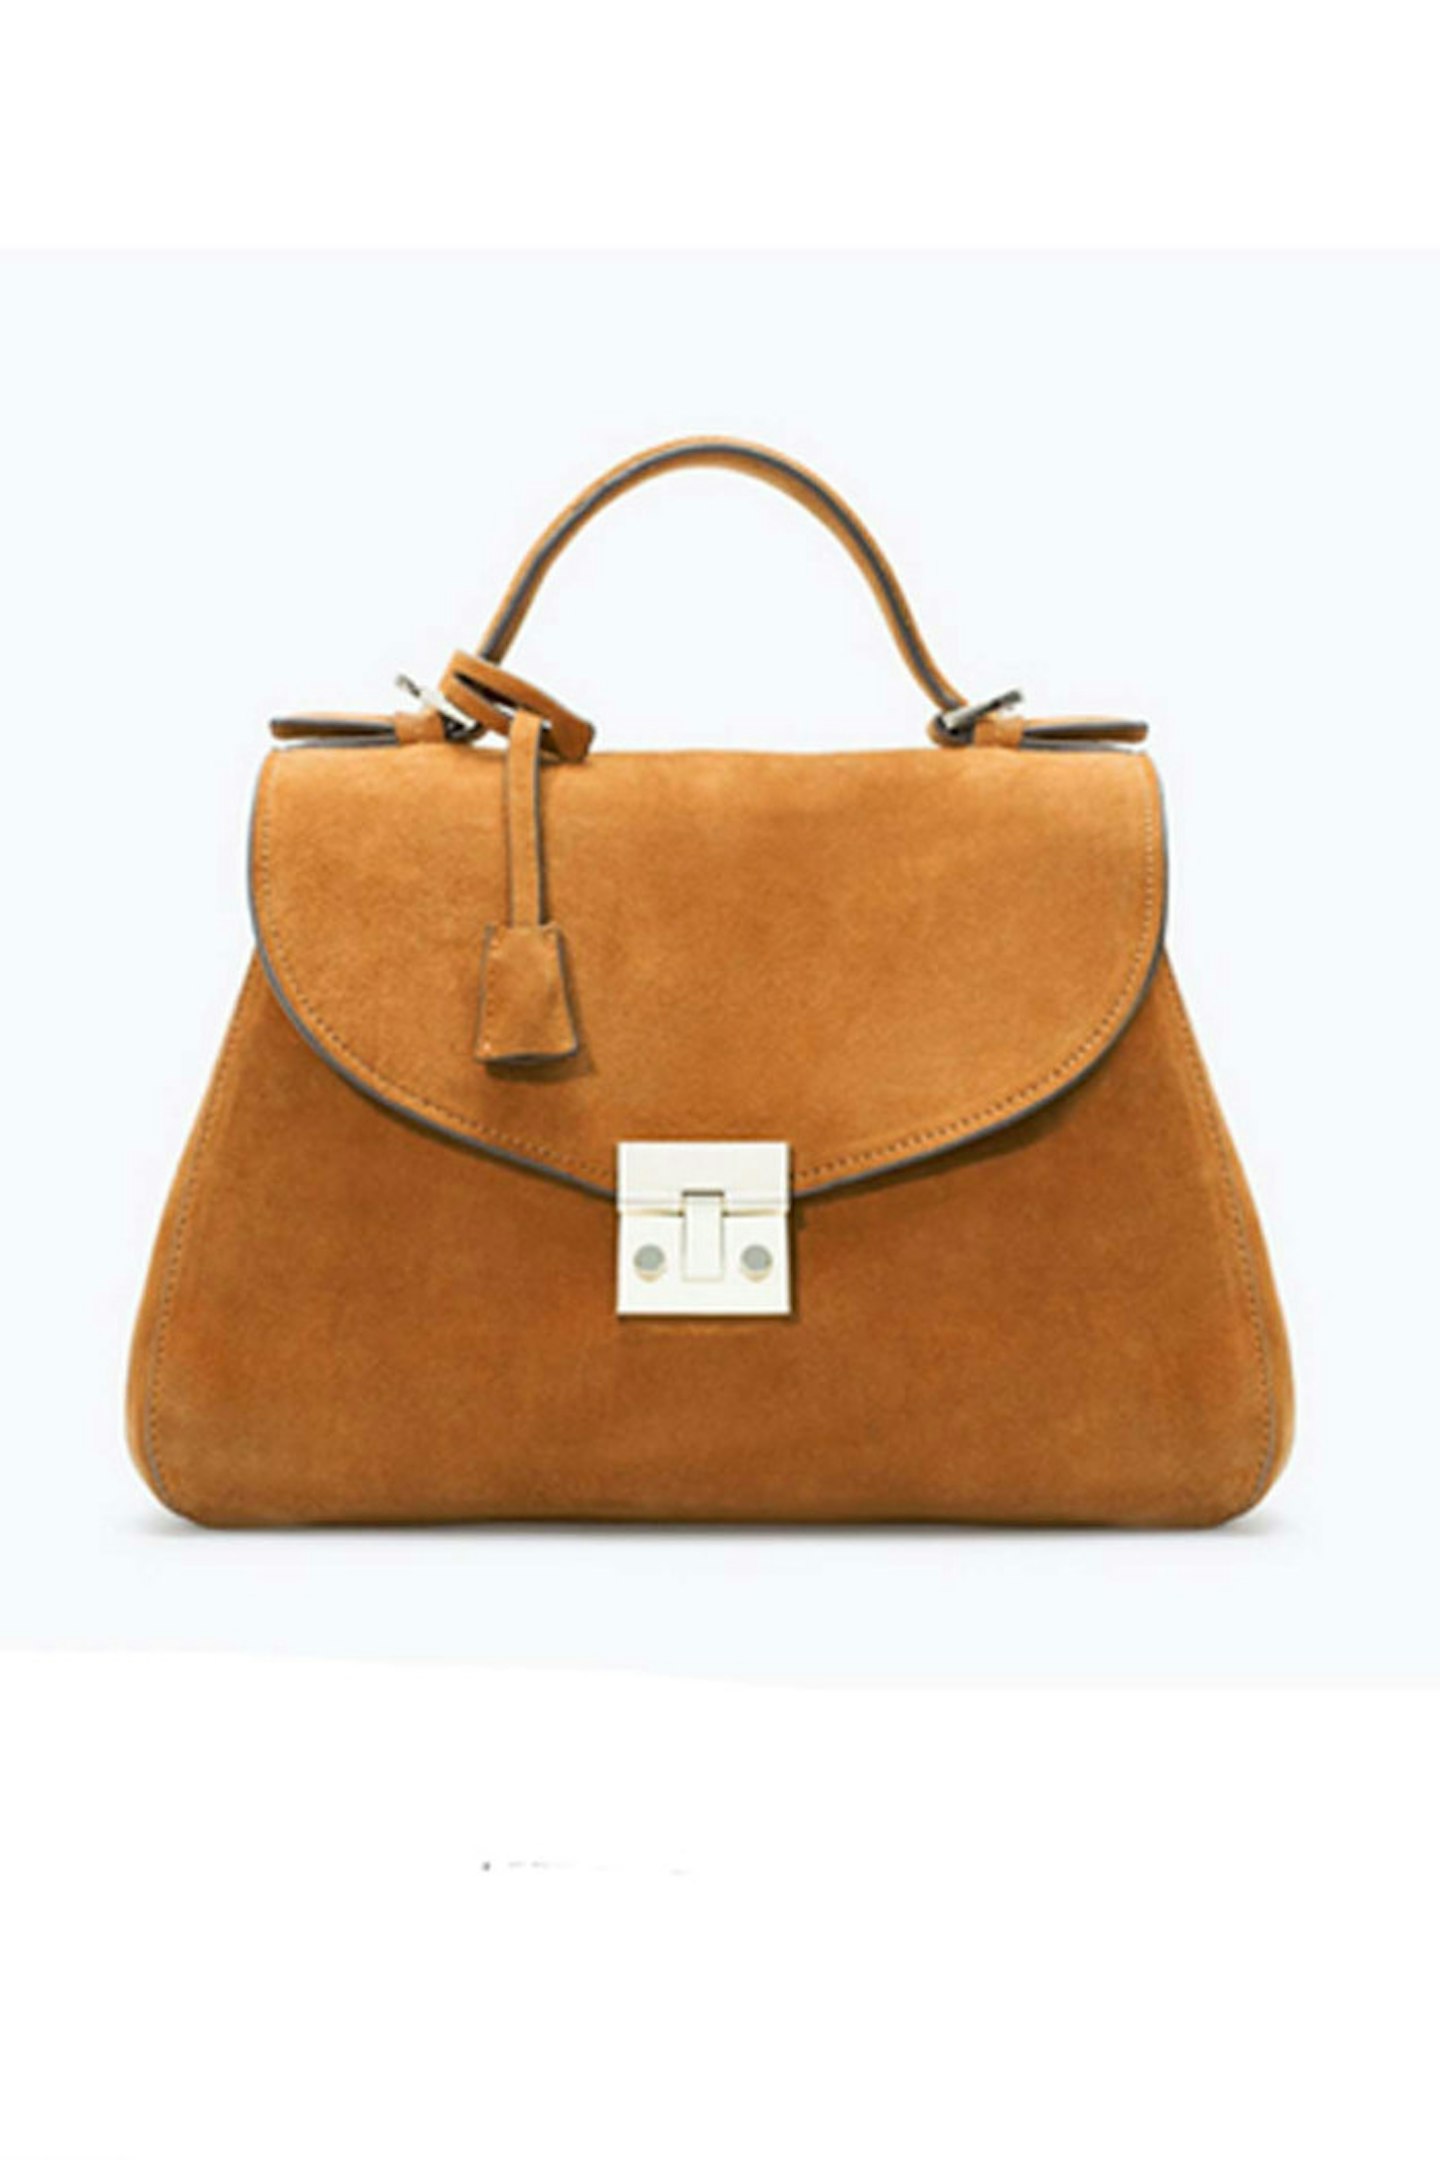 22. Brown leather bowling bag, £69.99, Zara